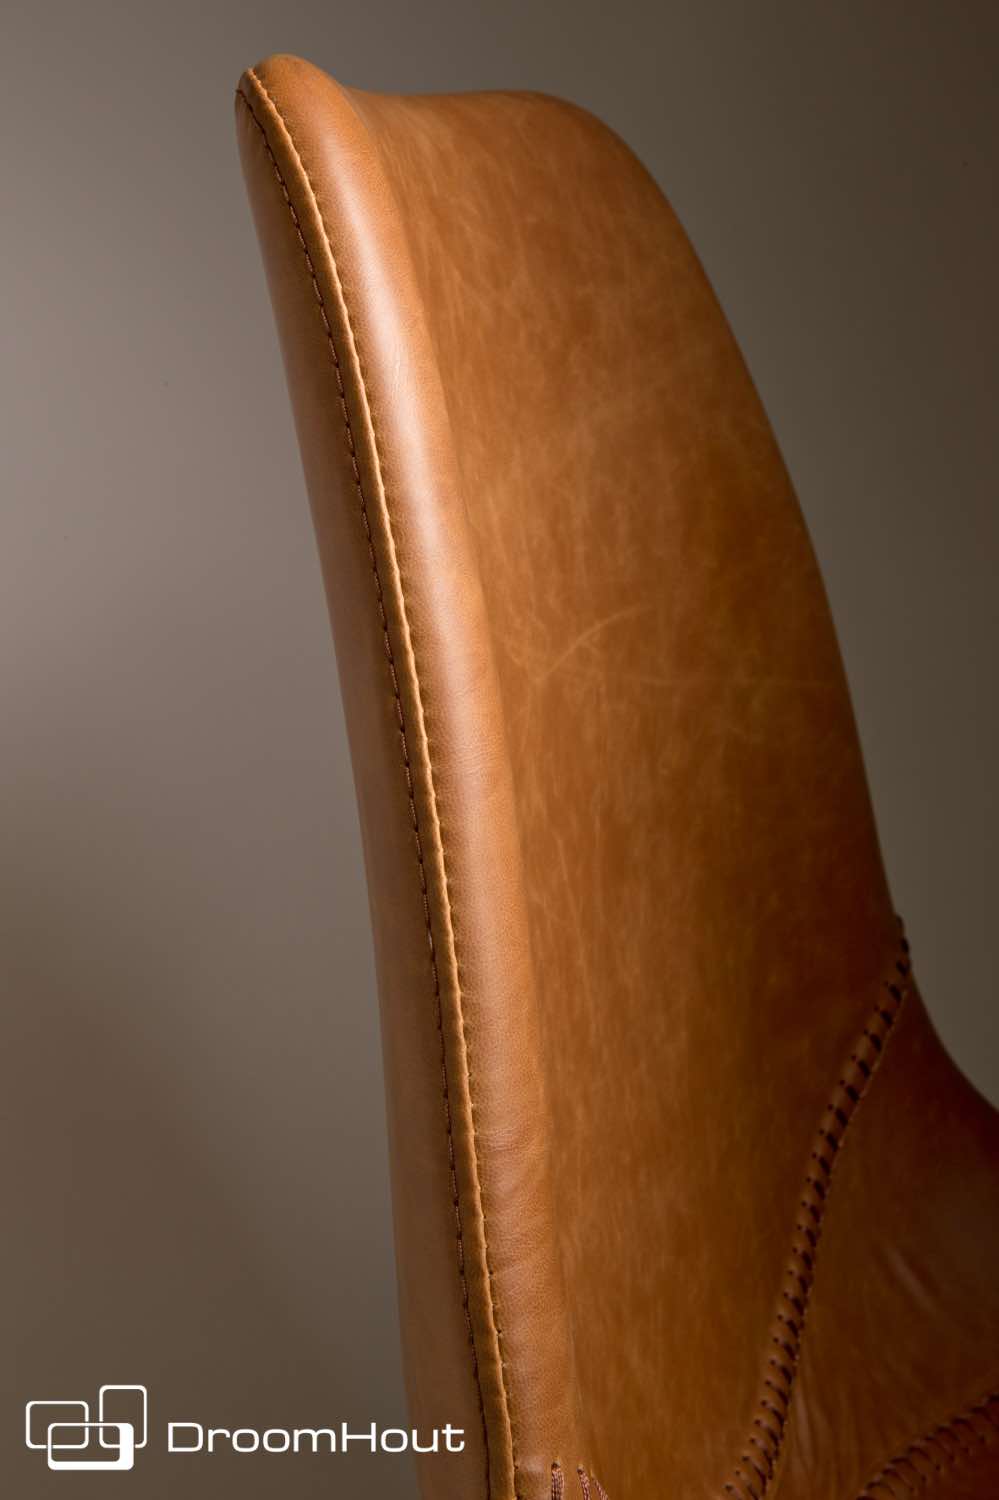 Stoel Dutchbone Franky Chair LL (per 2)